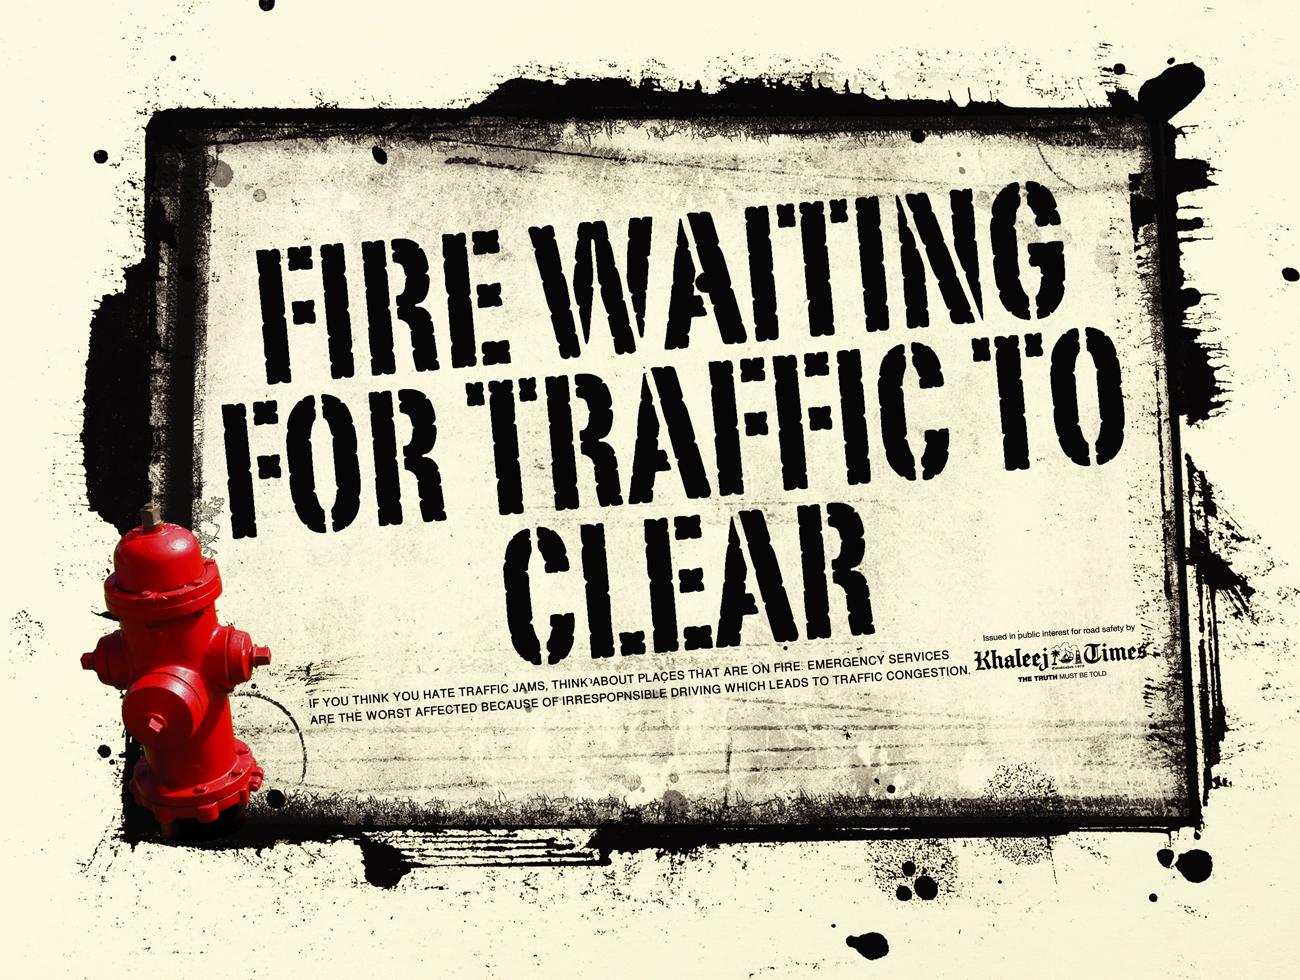 Praxis_Khaleej_Times_Traffic_Jam_Firebrigade